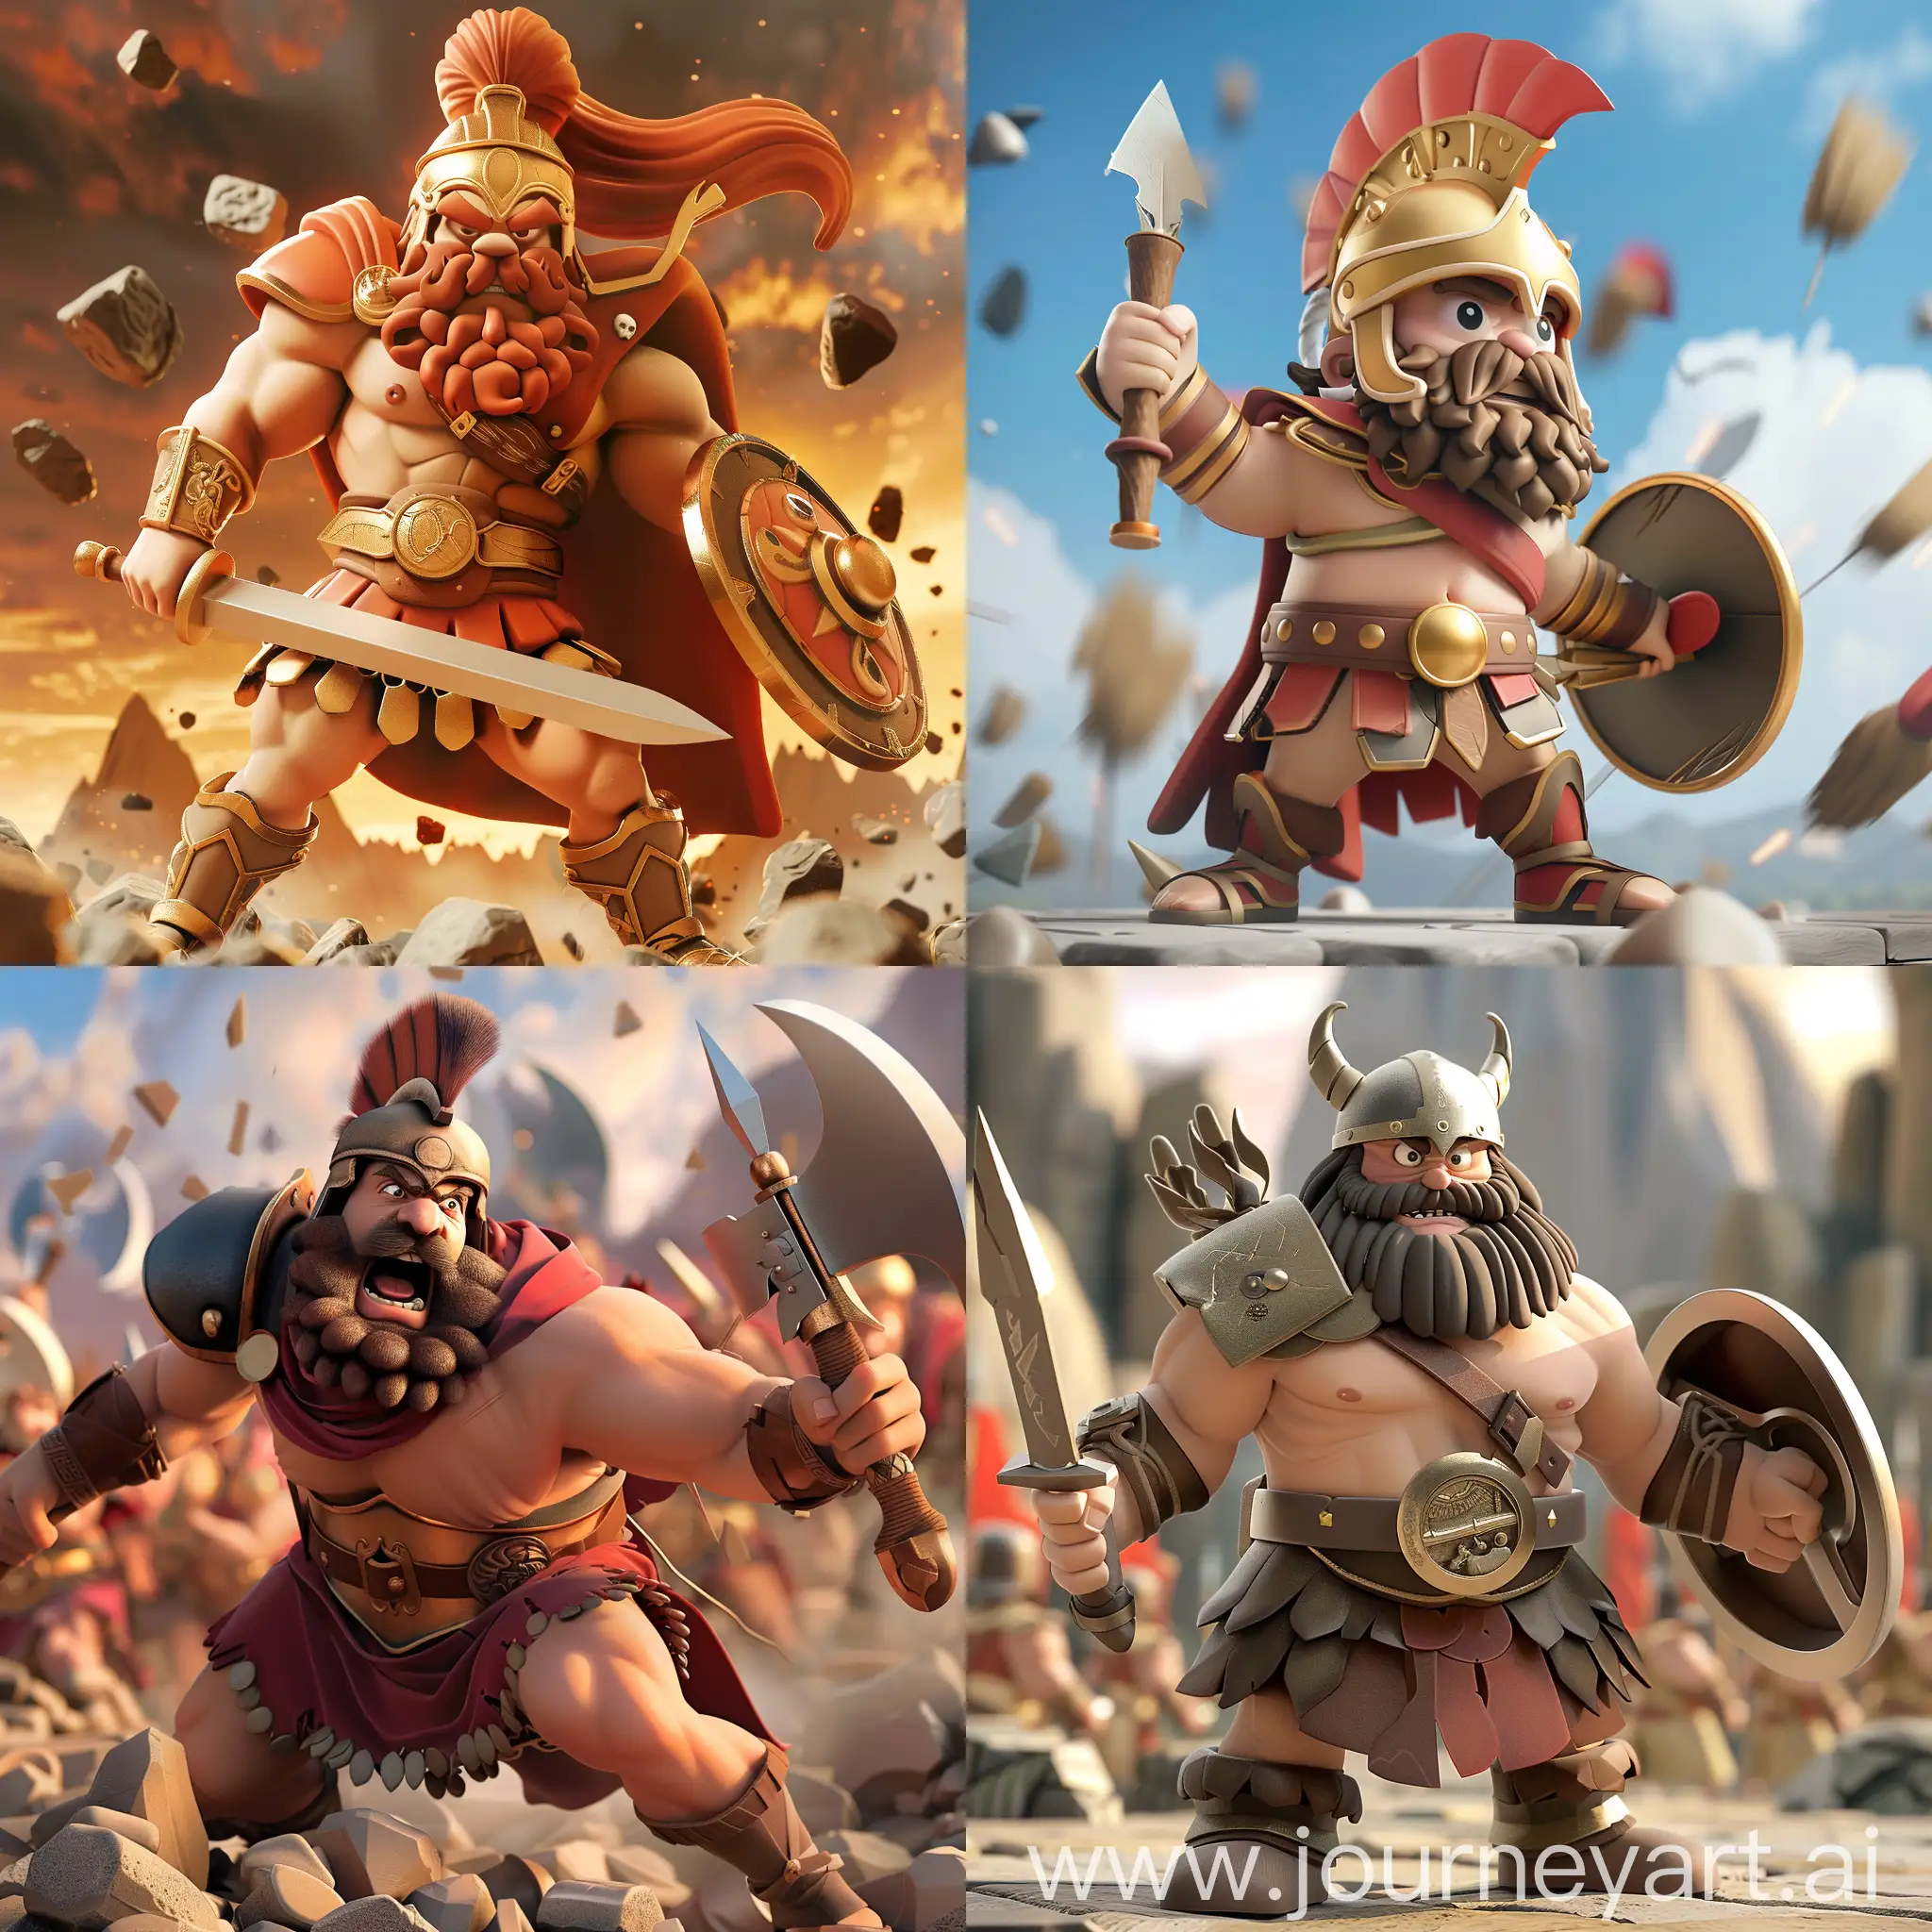 Epic-Clash-of-3D-Cartoon-God-of-War-in-Battle